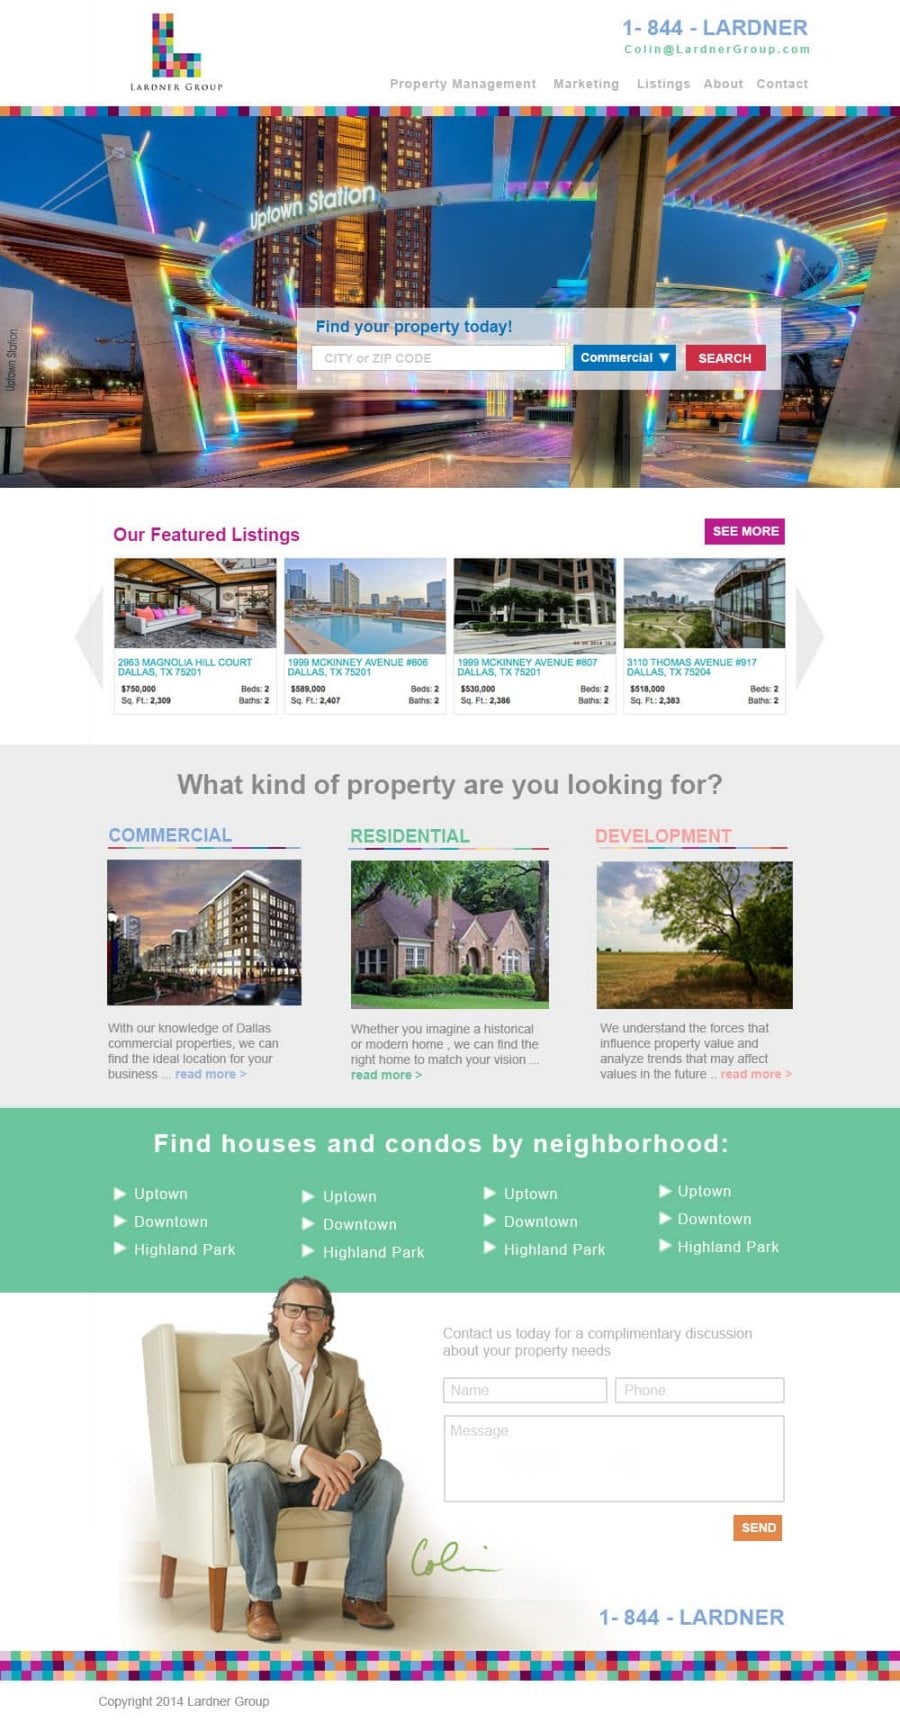 Modern And Colorful Website Design For A Dallas Real Estate Company